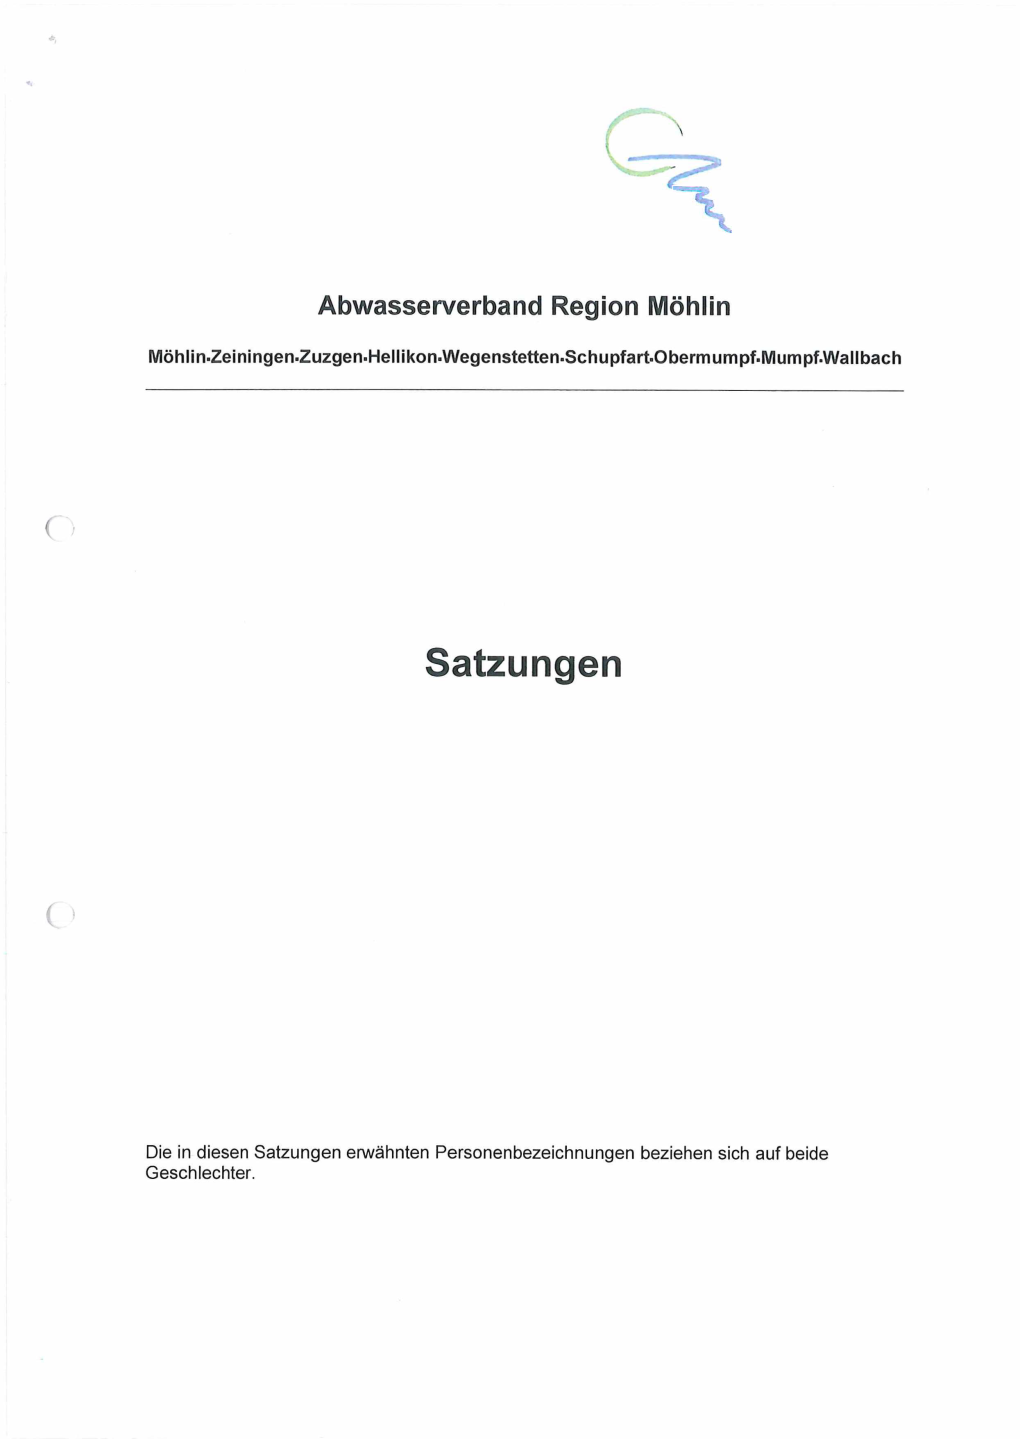 AVR Abwasserverband Region Möhlin; Satzungen